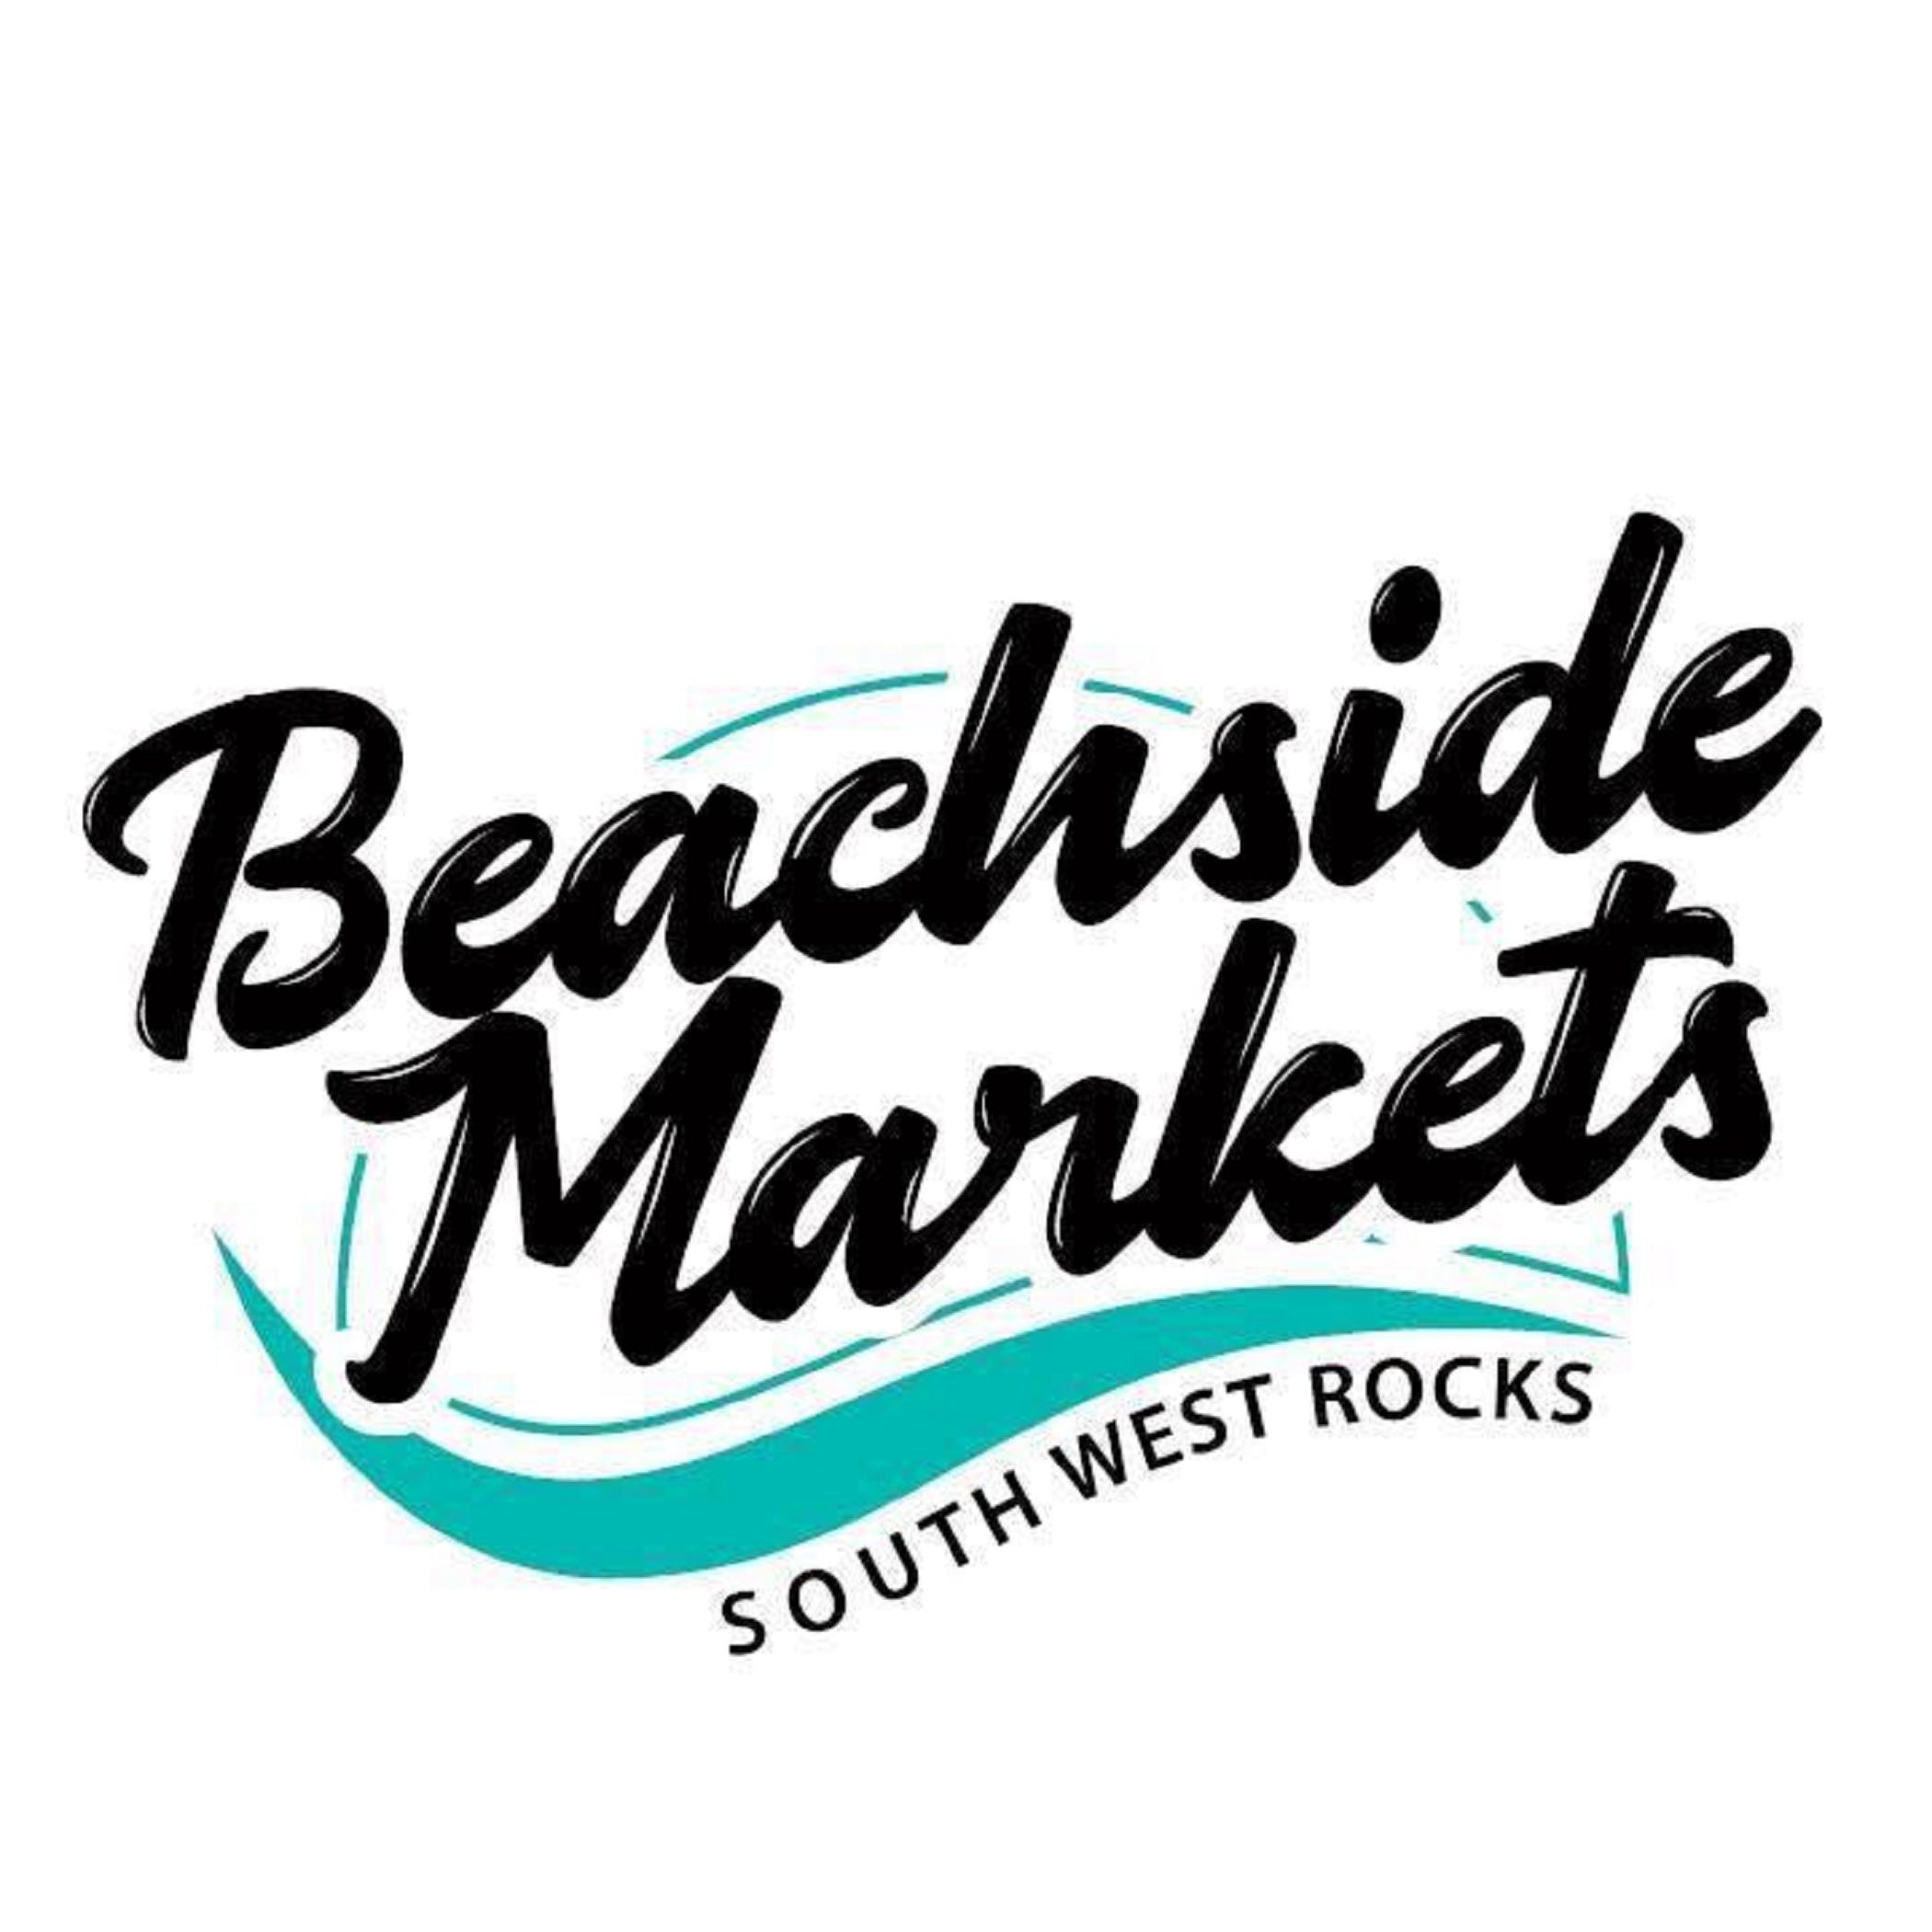 Beachside Markets South West Rocks - Lightning Ridge Tourism